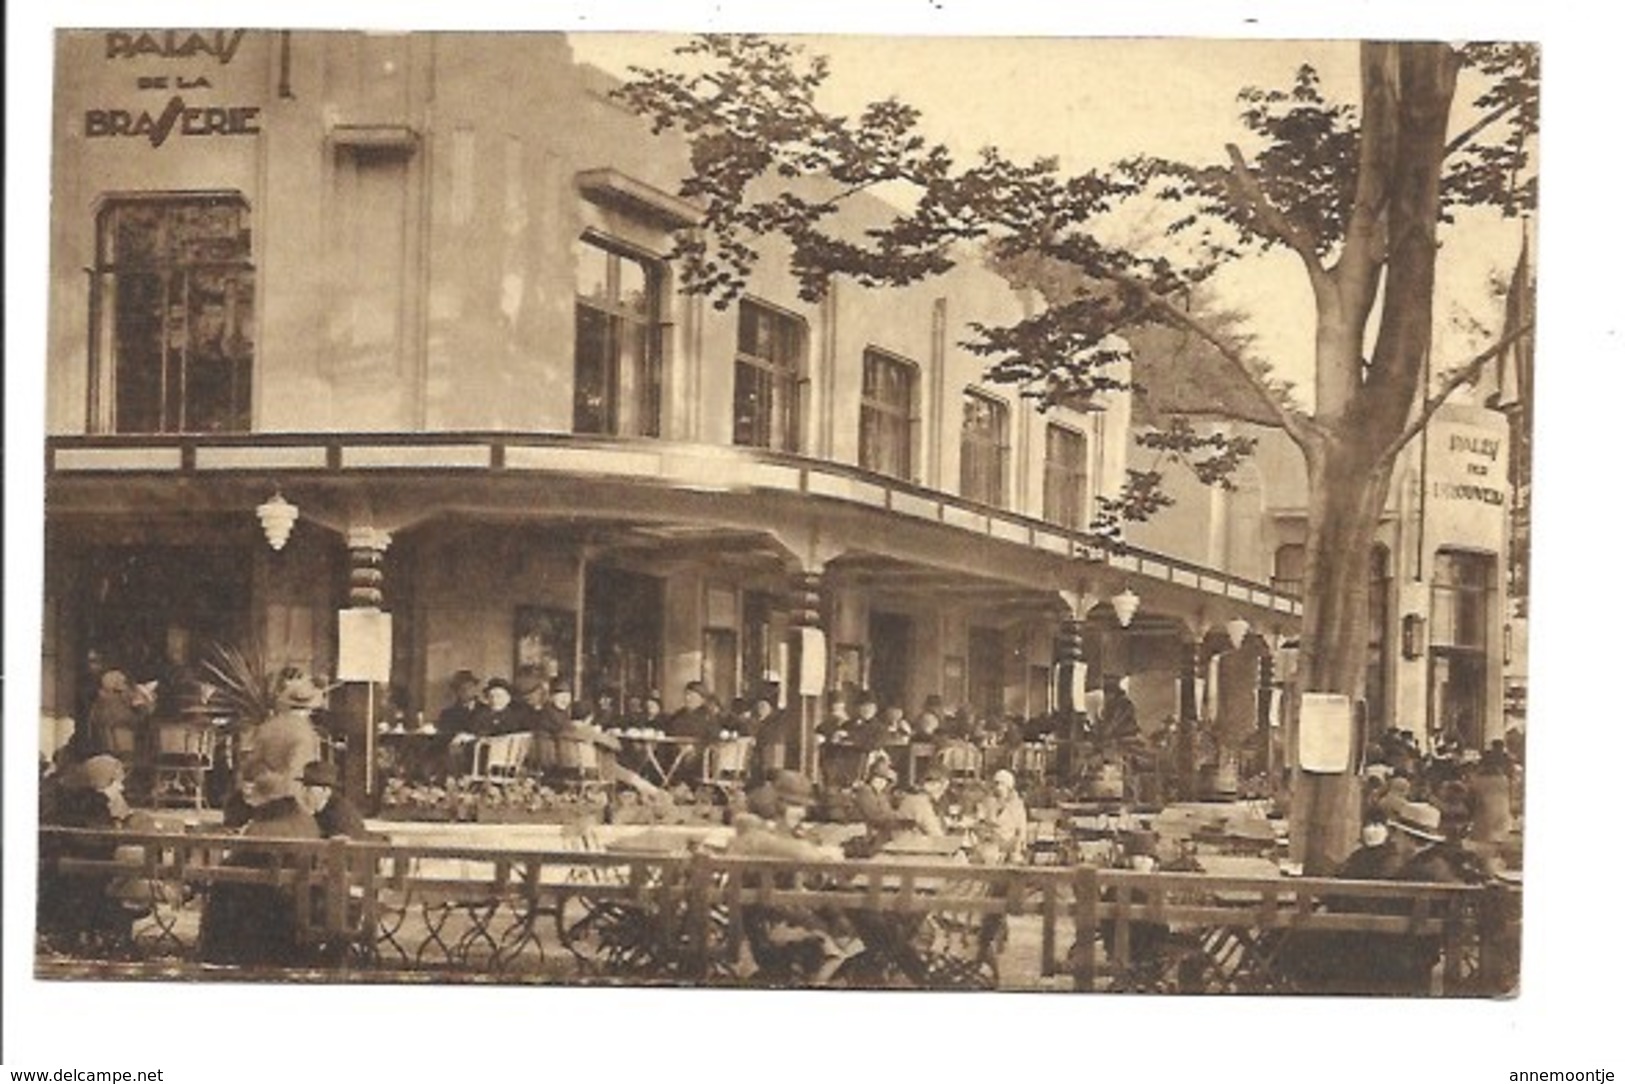 Antwerpen - Exposition 1930 - Palais De La Brasserie - Restaurant Taverne Fr. Cloetens. - Antwerpen